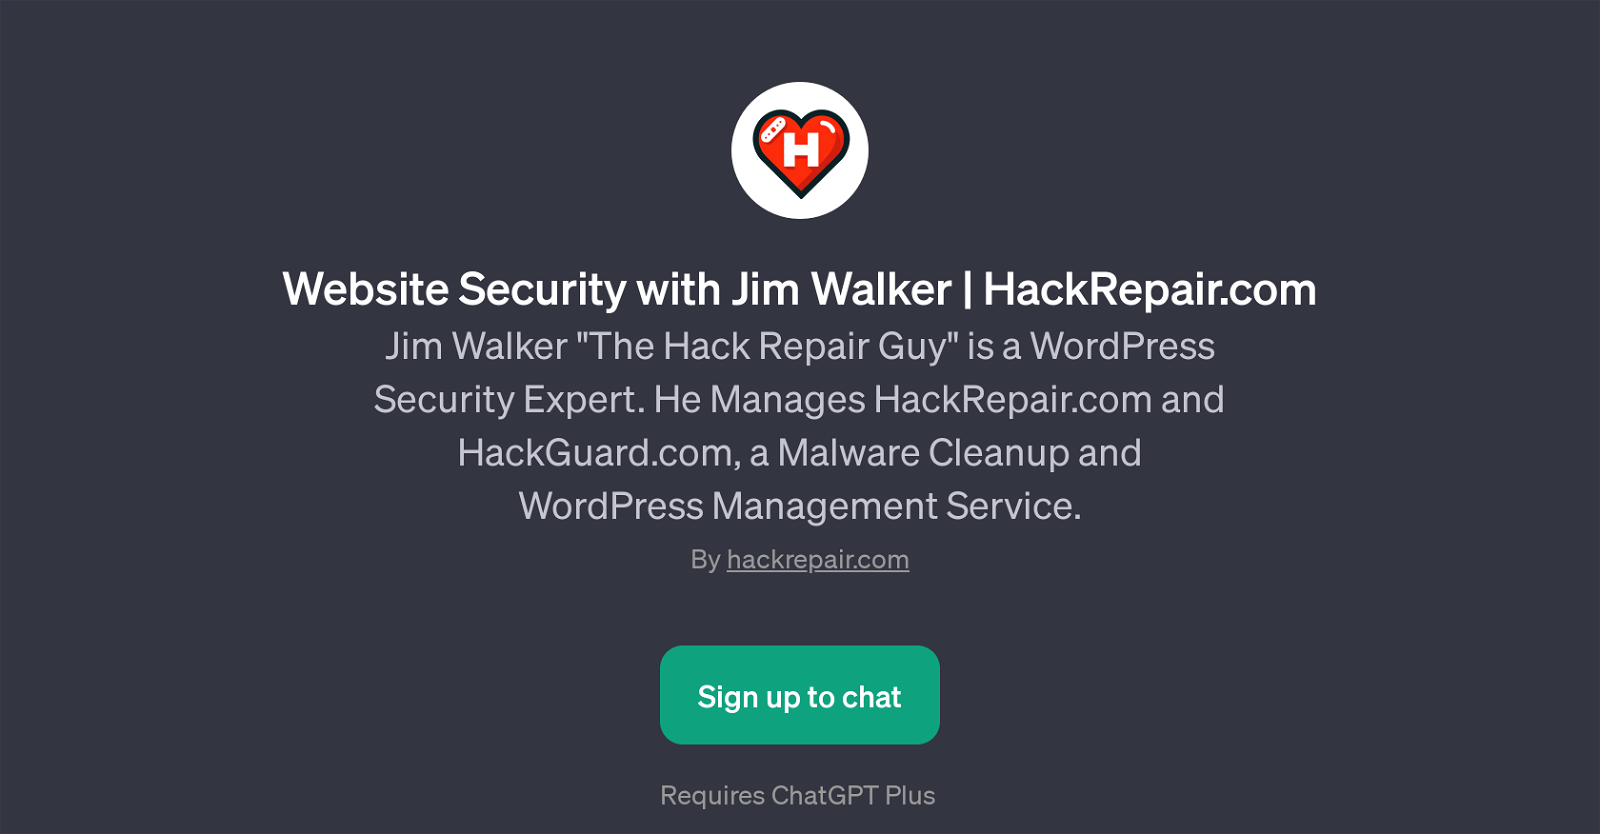 Website Security with Jim Walker | HackRepair.com website